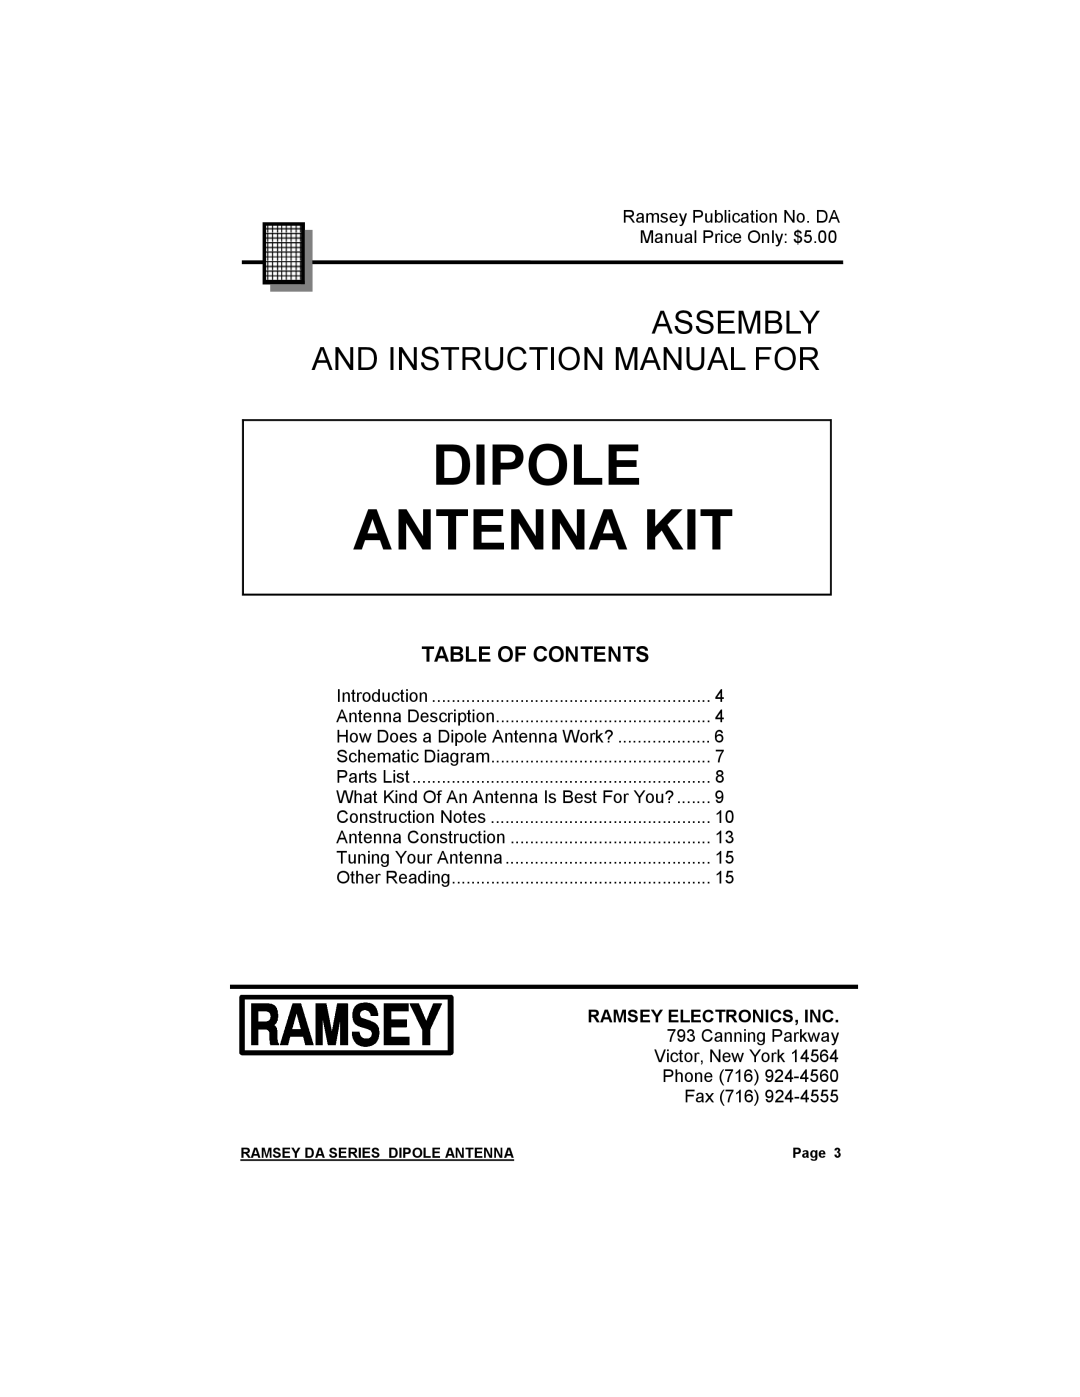 Ramsey Electronics DA-160 manual Dipole Antenna Kit, Table Of Contents 